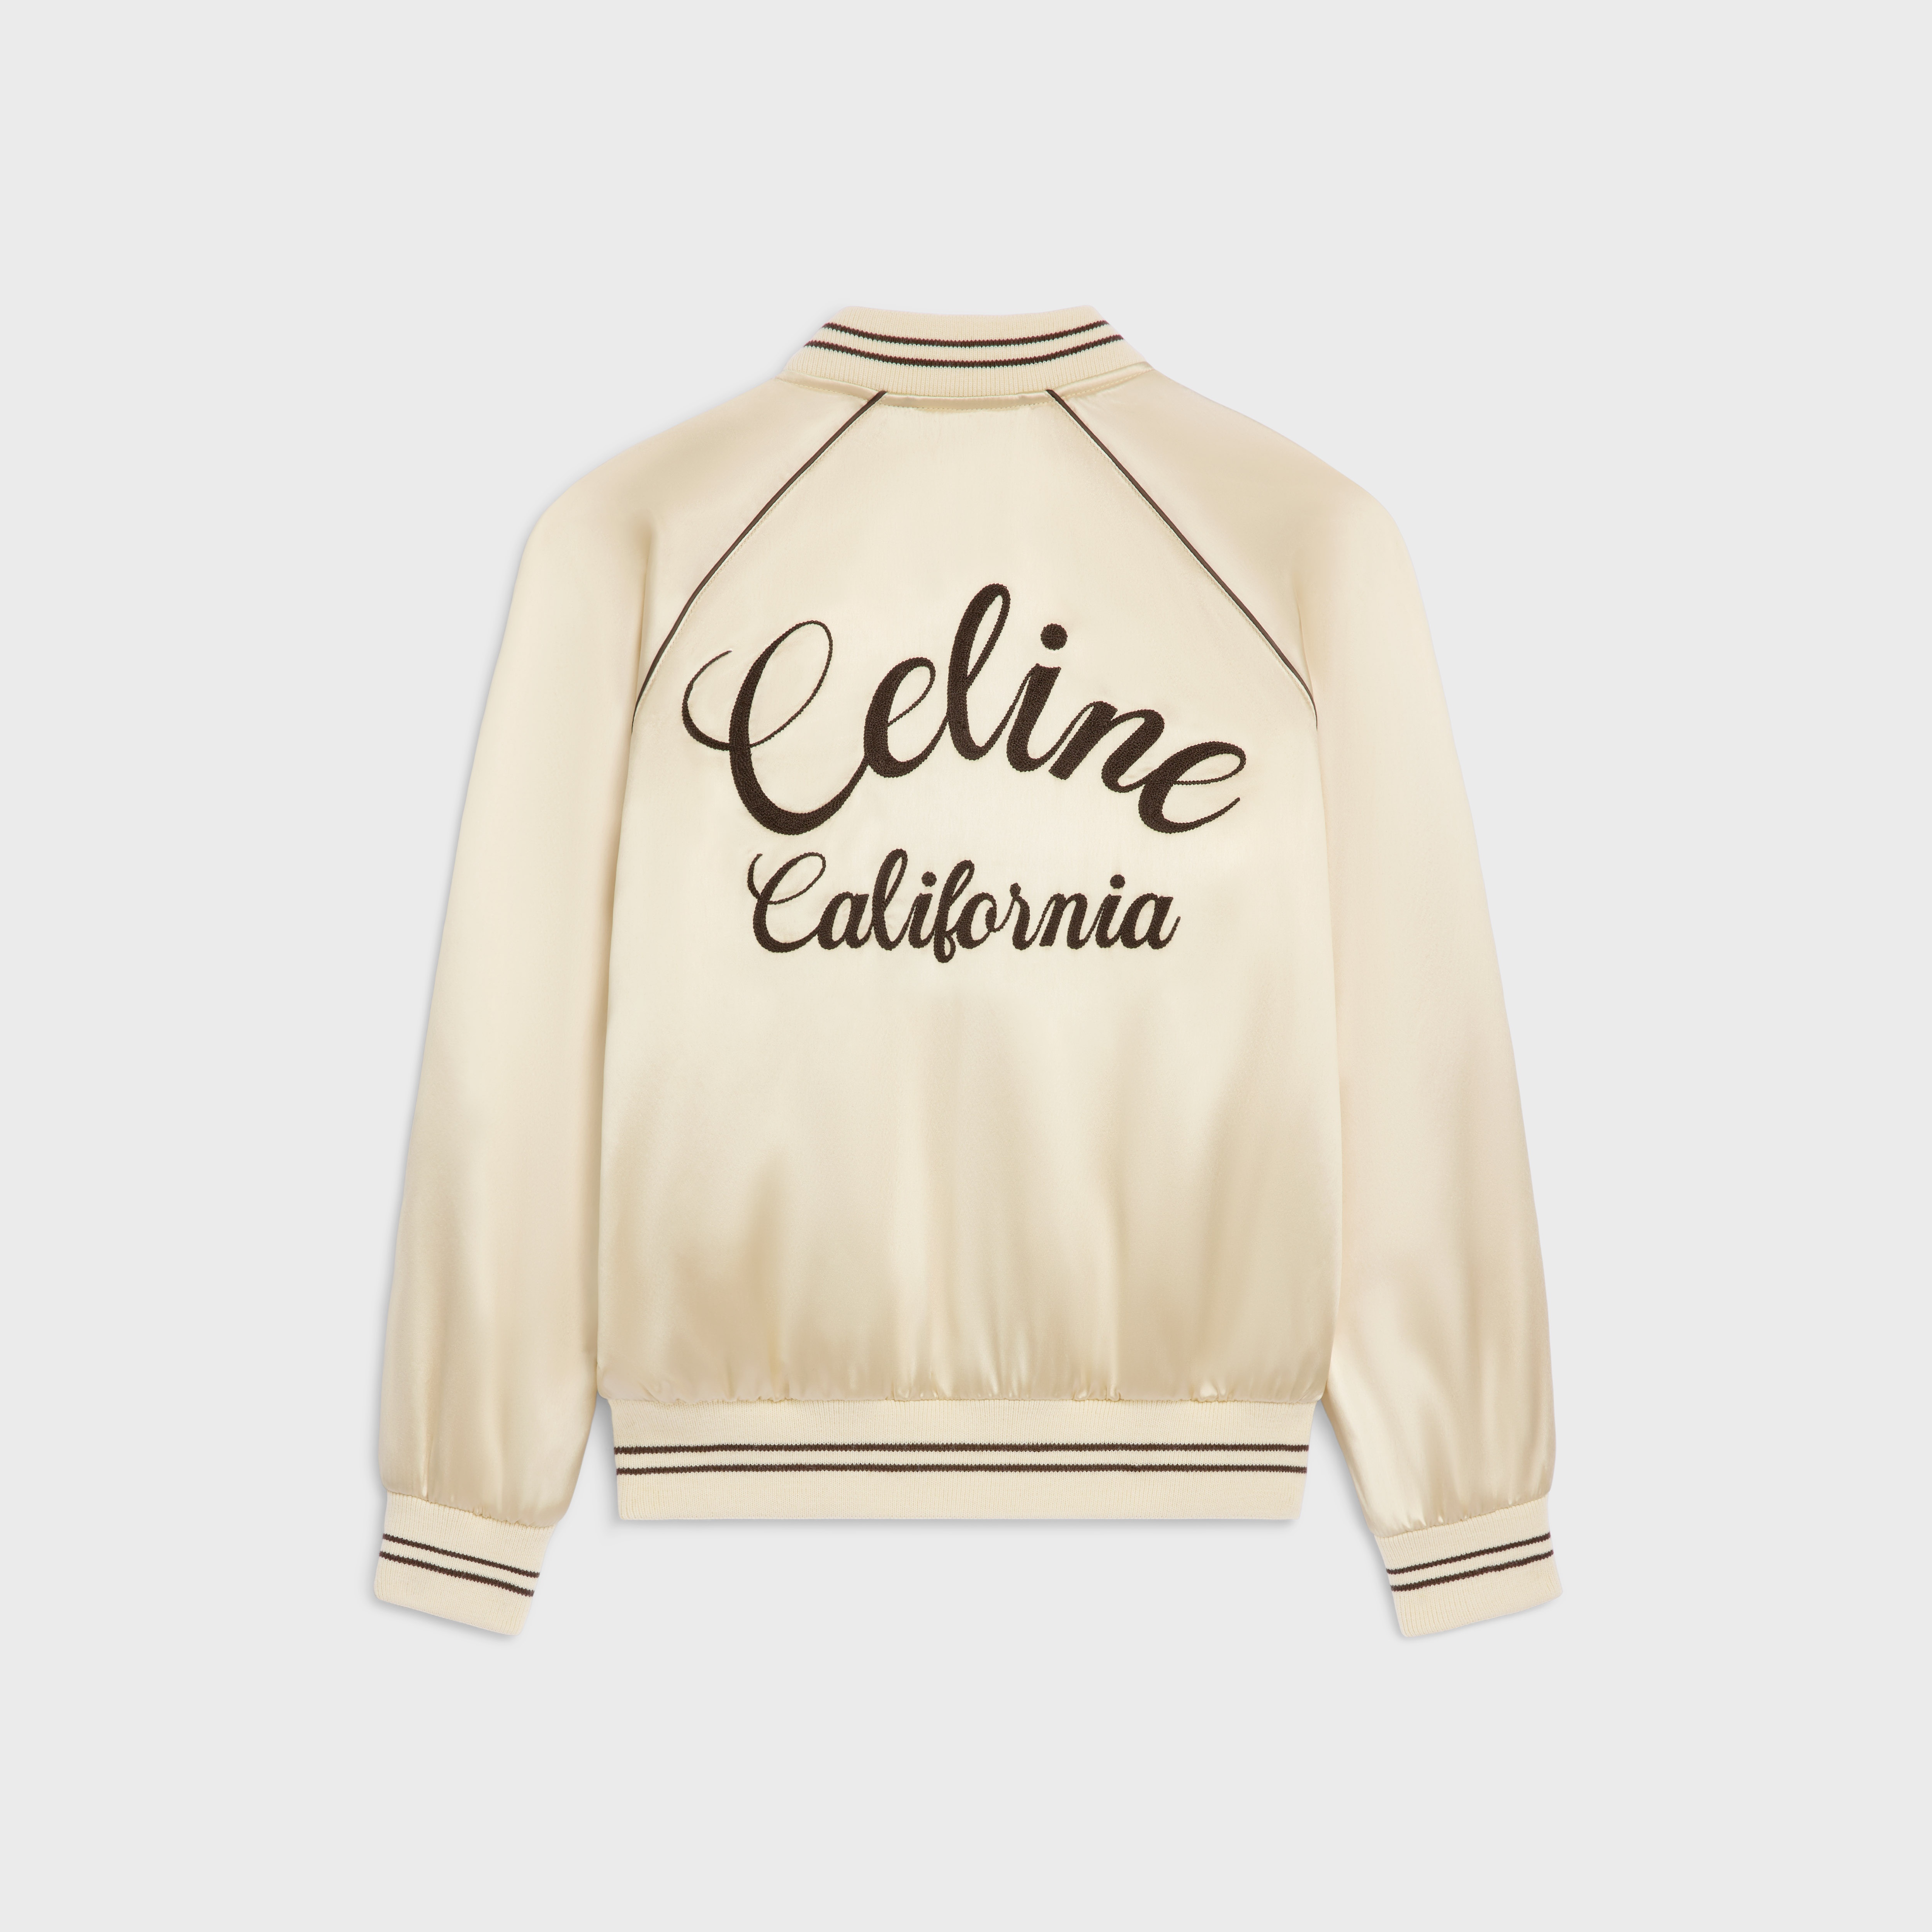 Celine souvenir Teddy jacket in flowing satin - 2